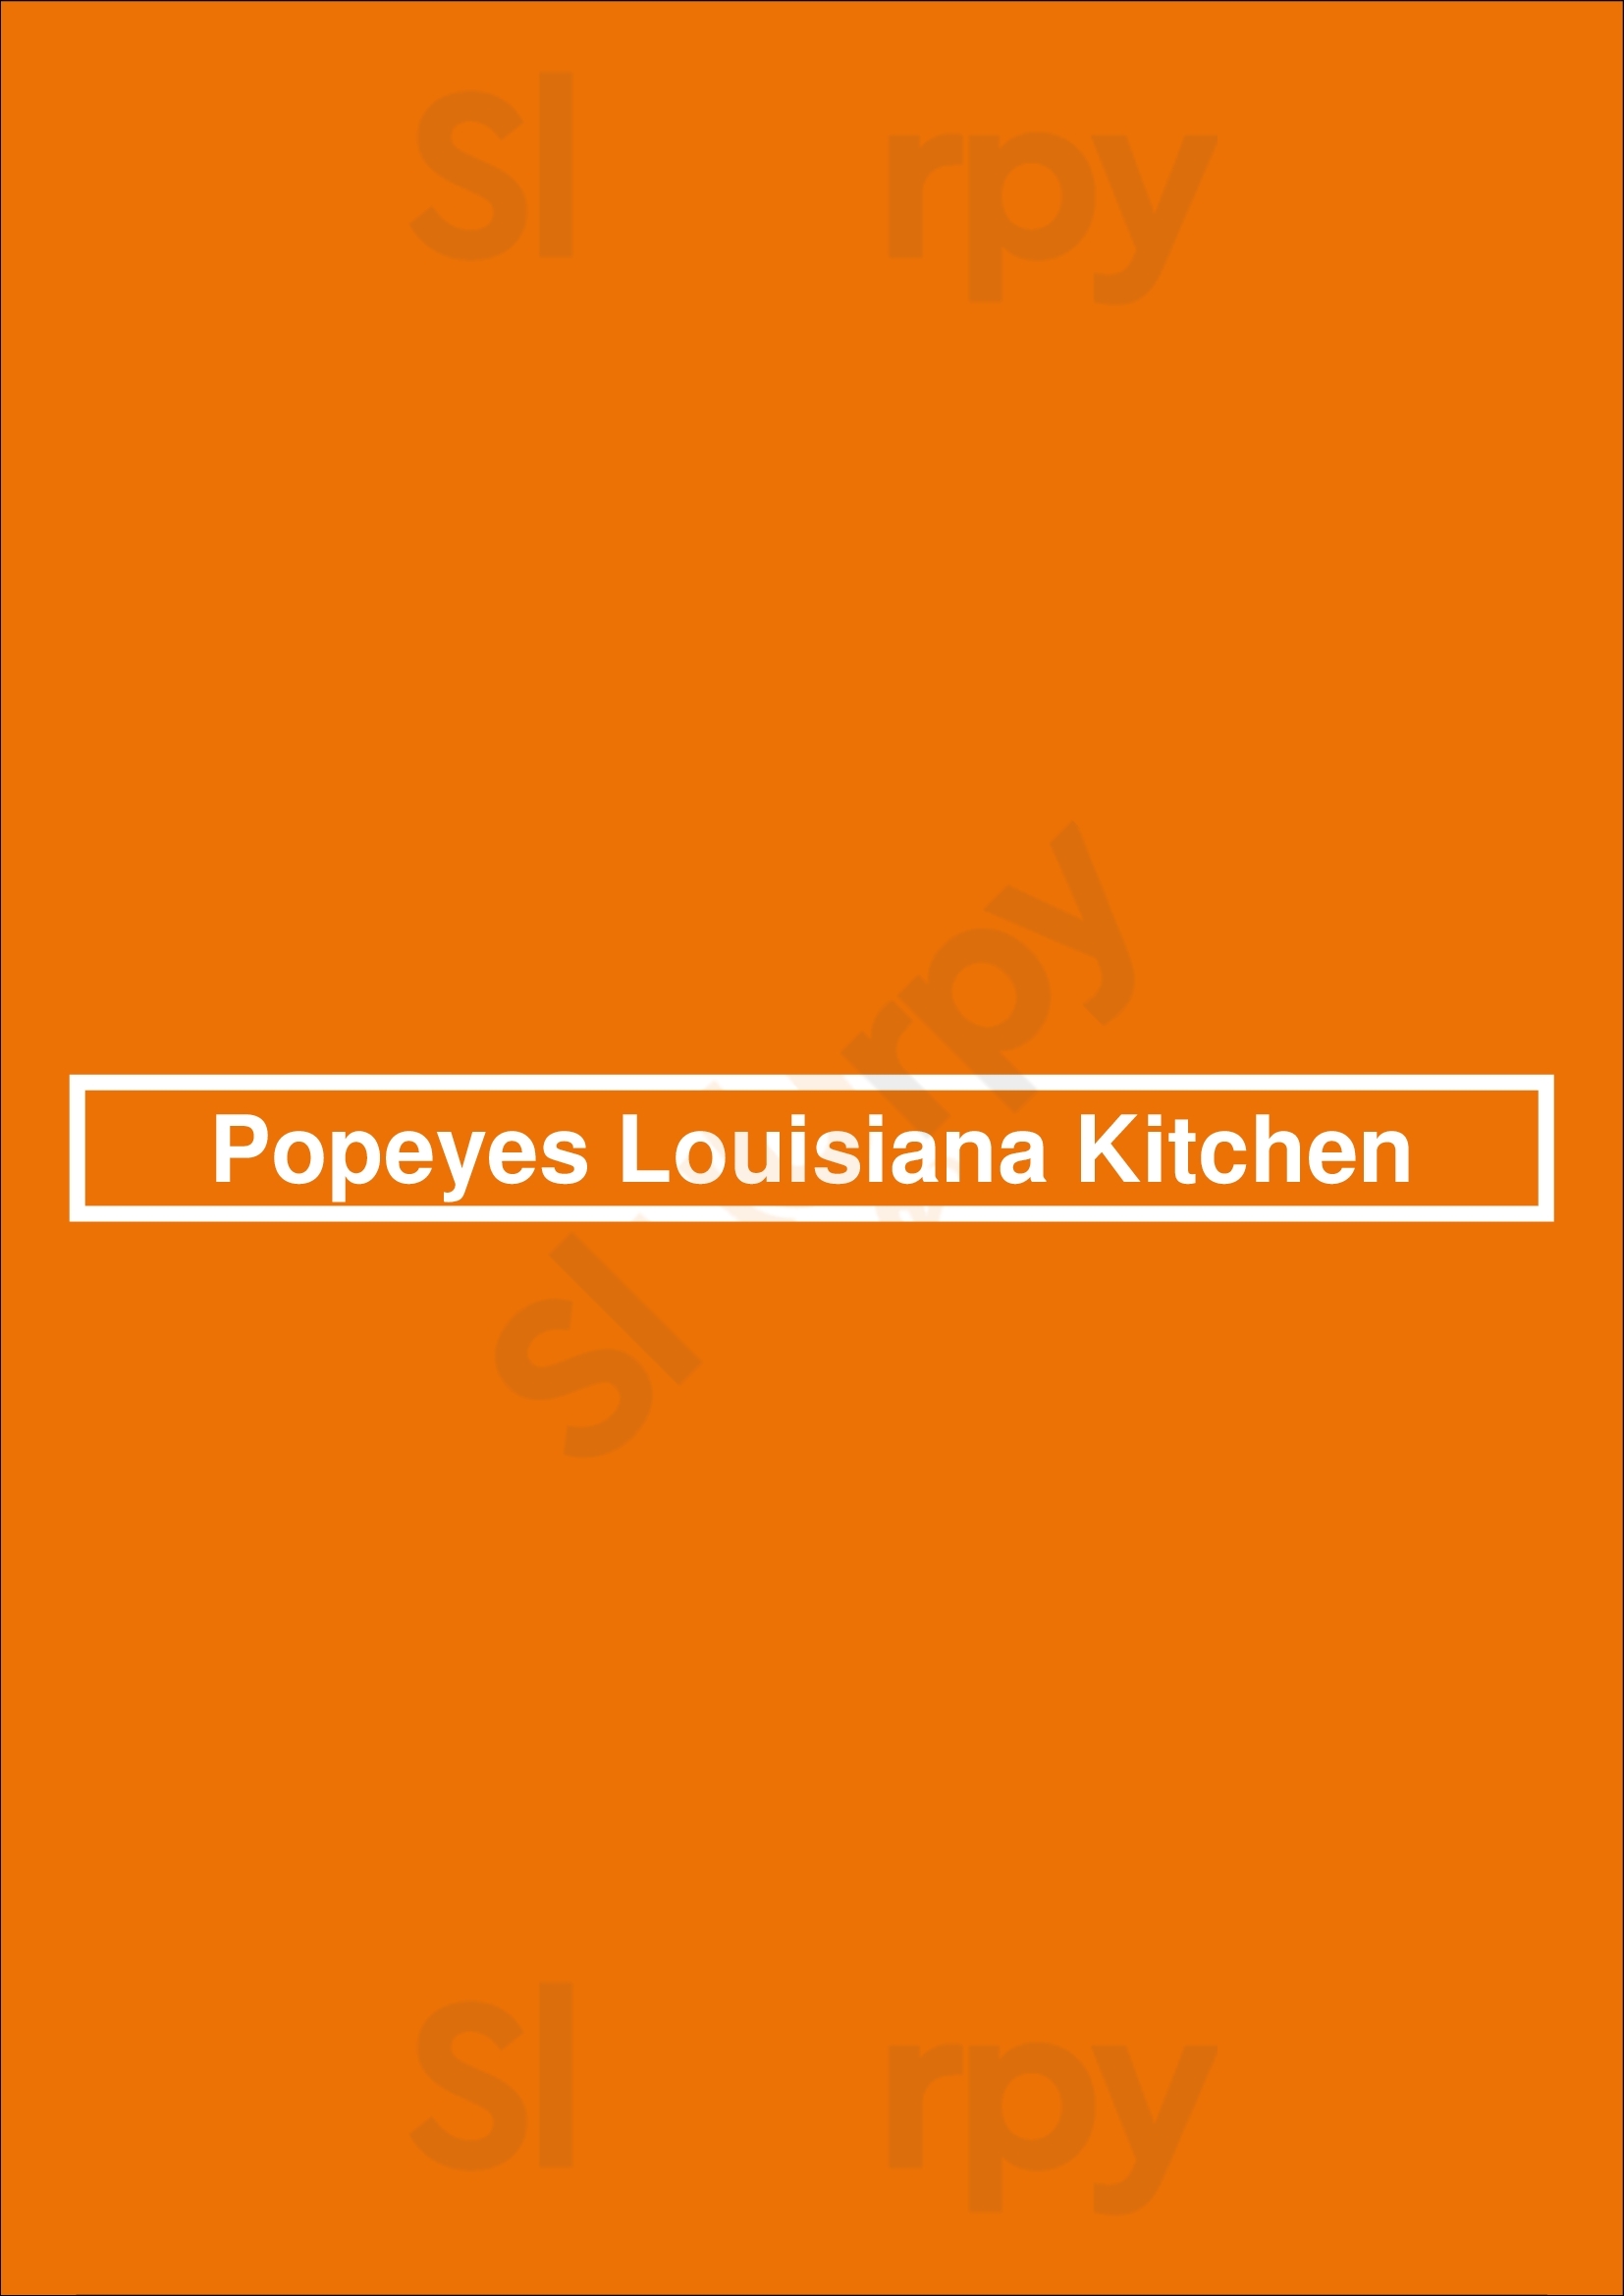 Popeyes Louisiana Kitchen Mississauga Menu - 1